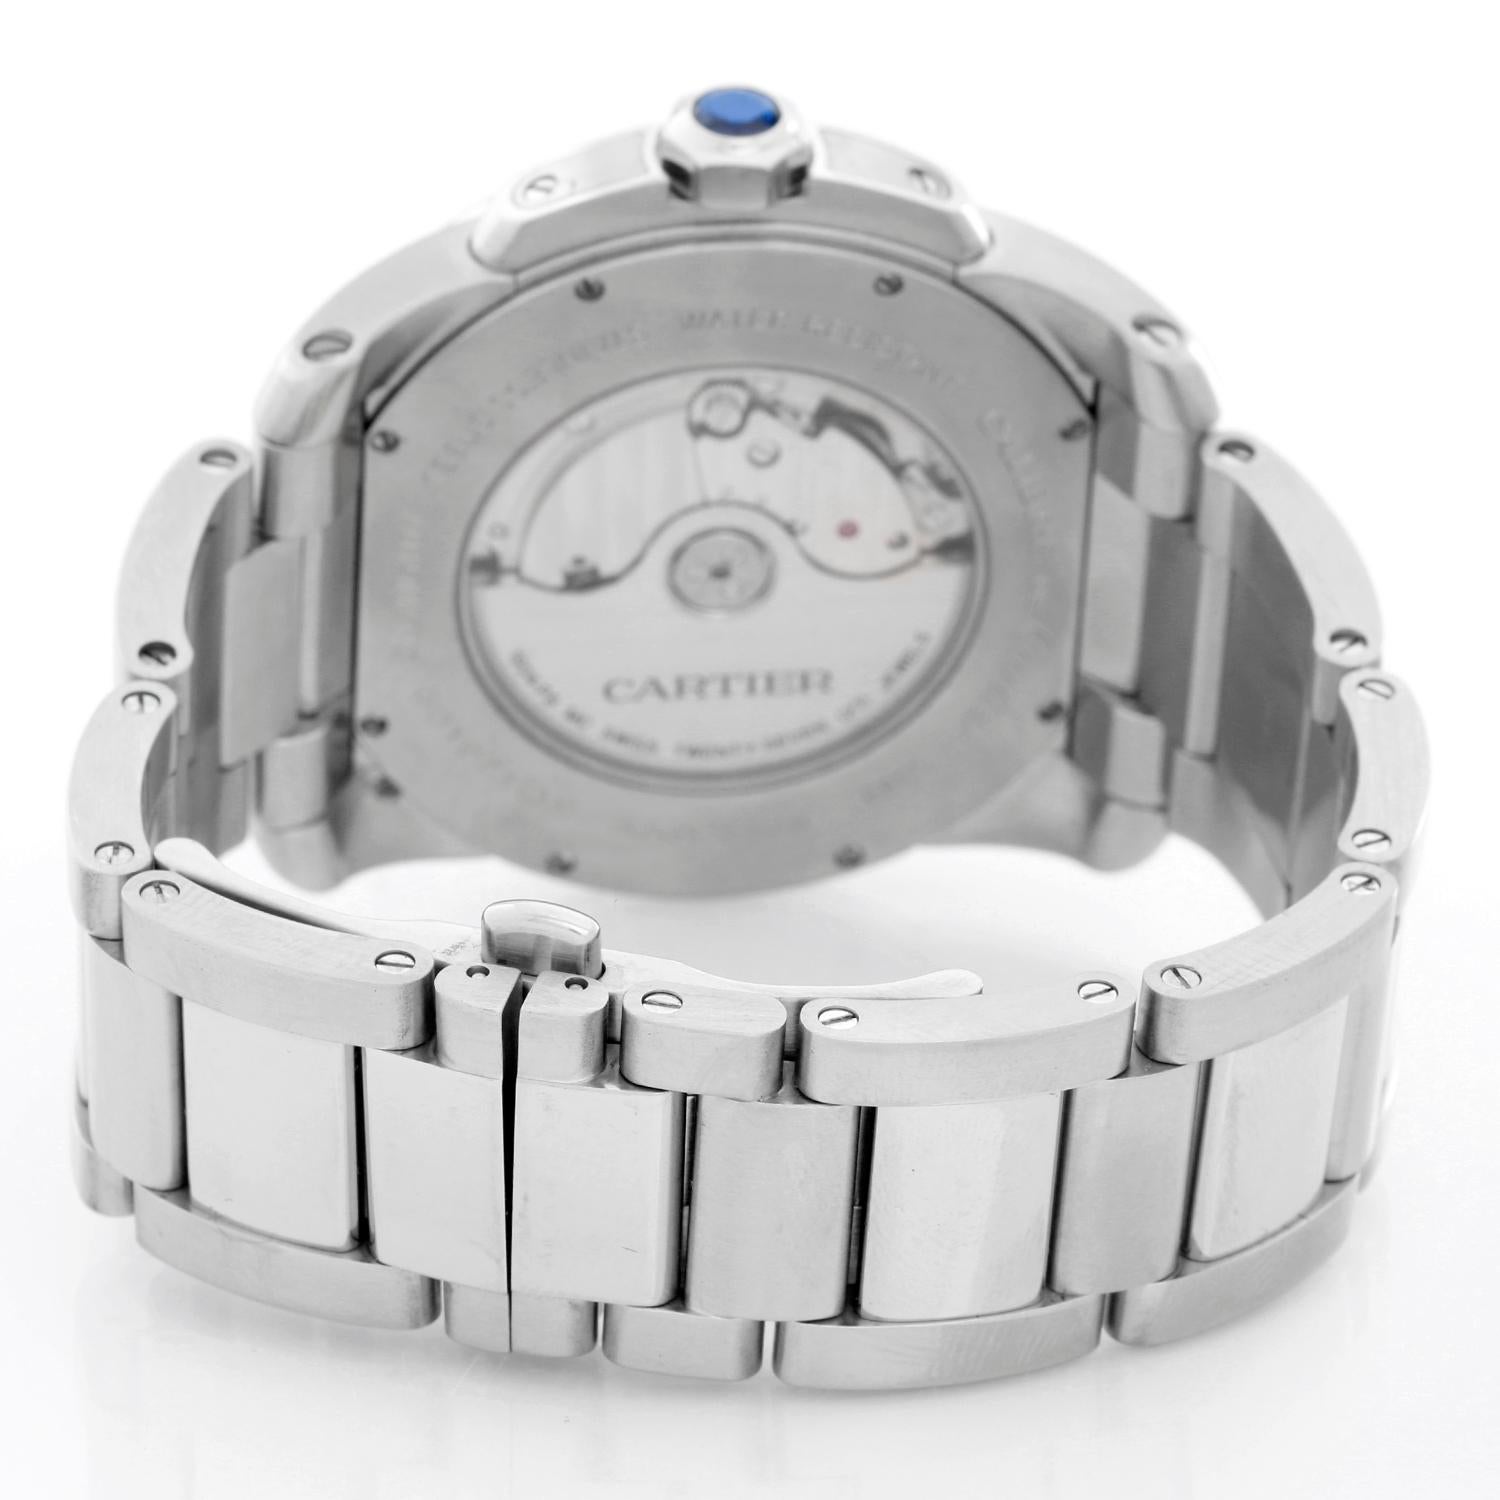 Men's Cartier Stainless Steel Automatic Wristwatch Ref W7100015